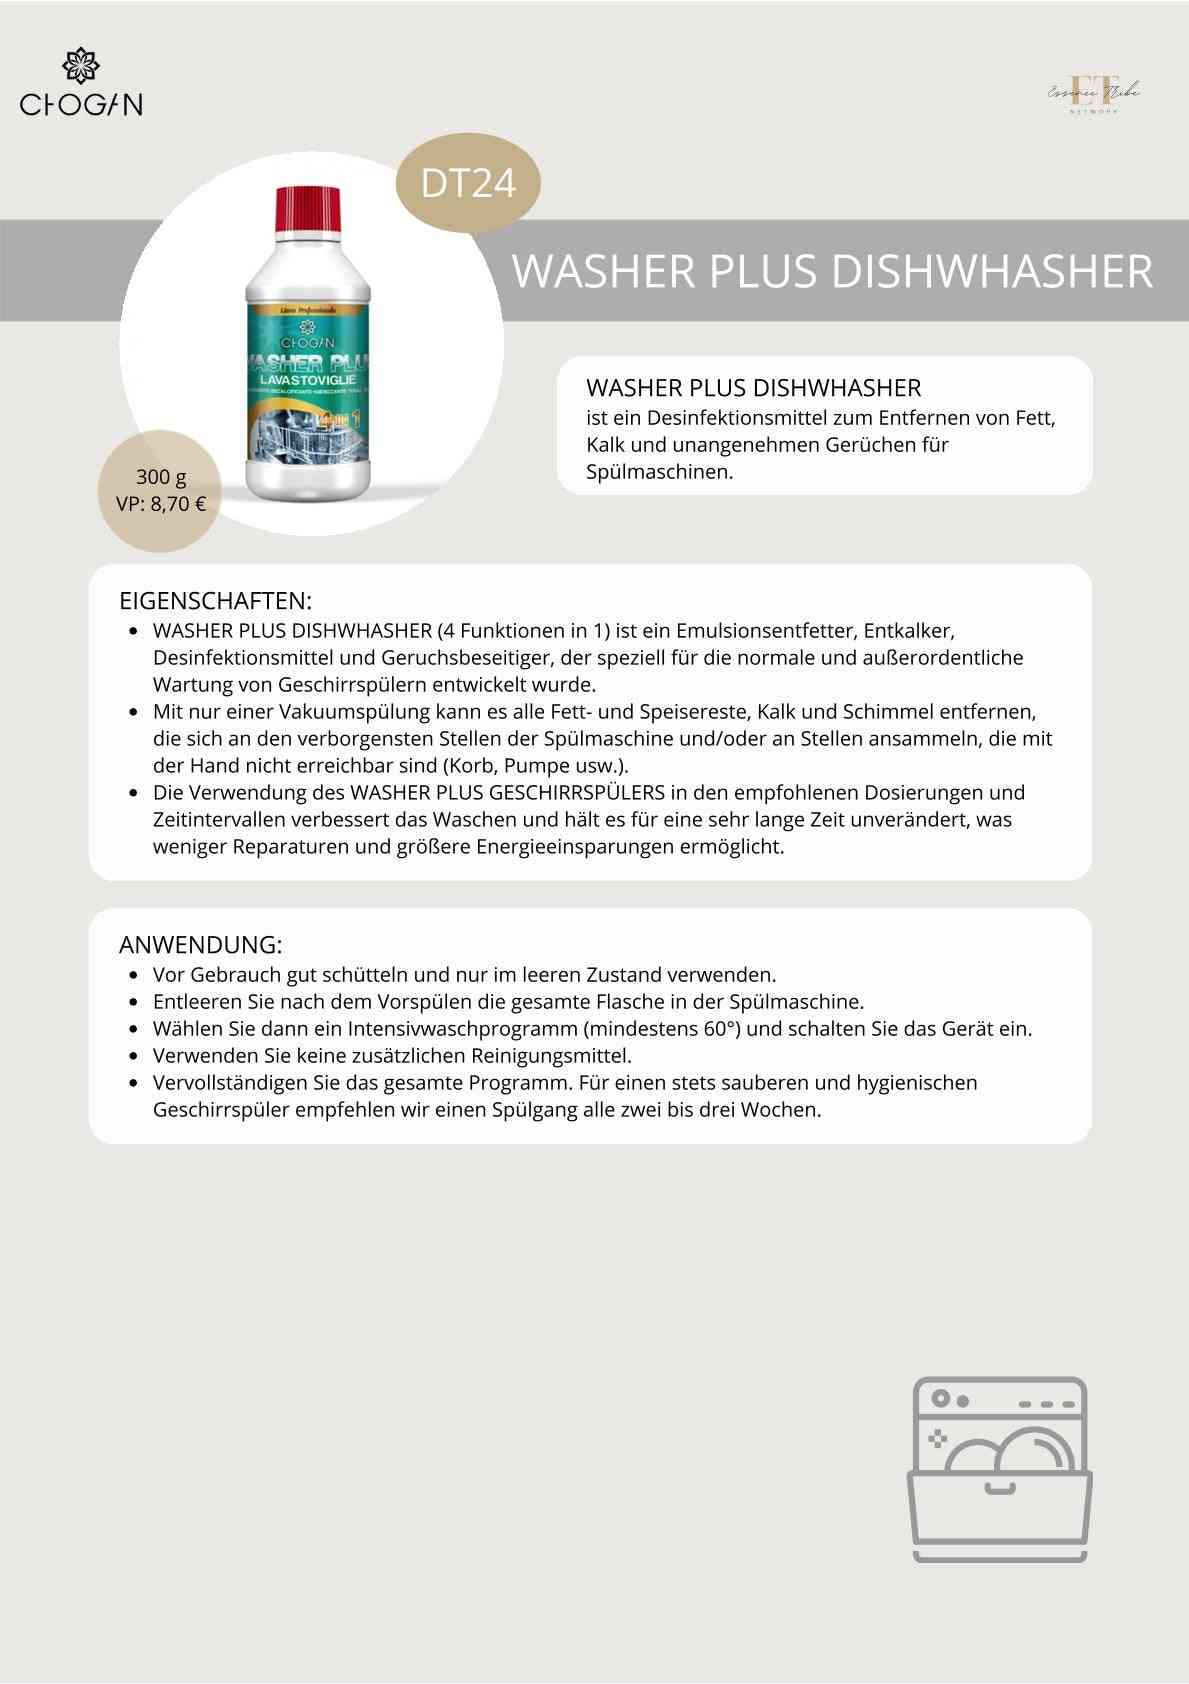 Washer Plus Lavastoviglie – dishwasher cleaner